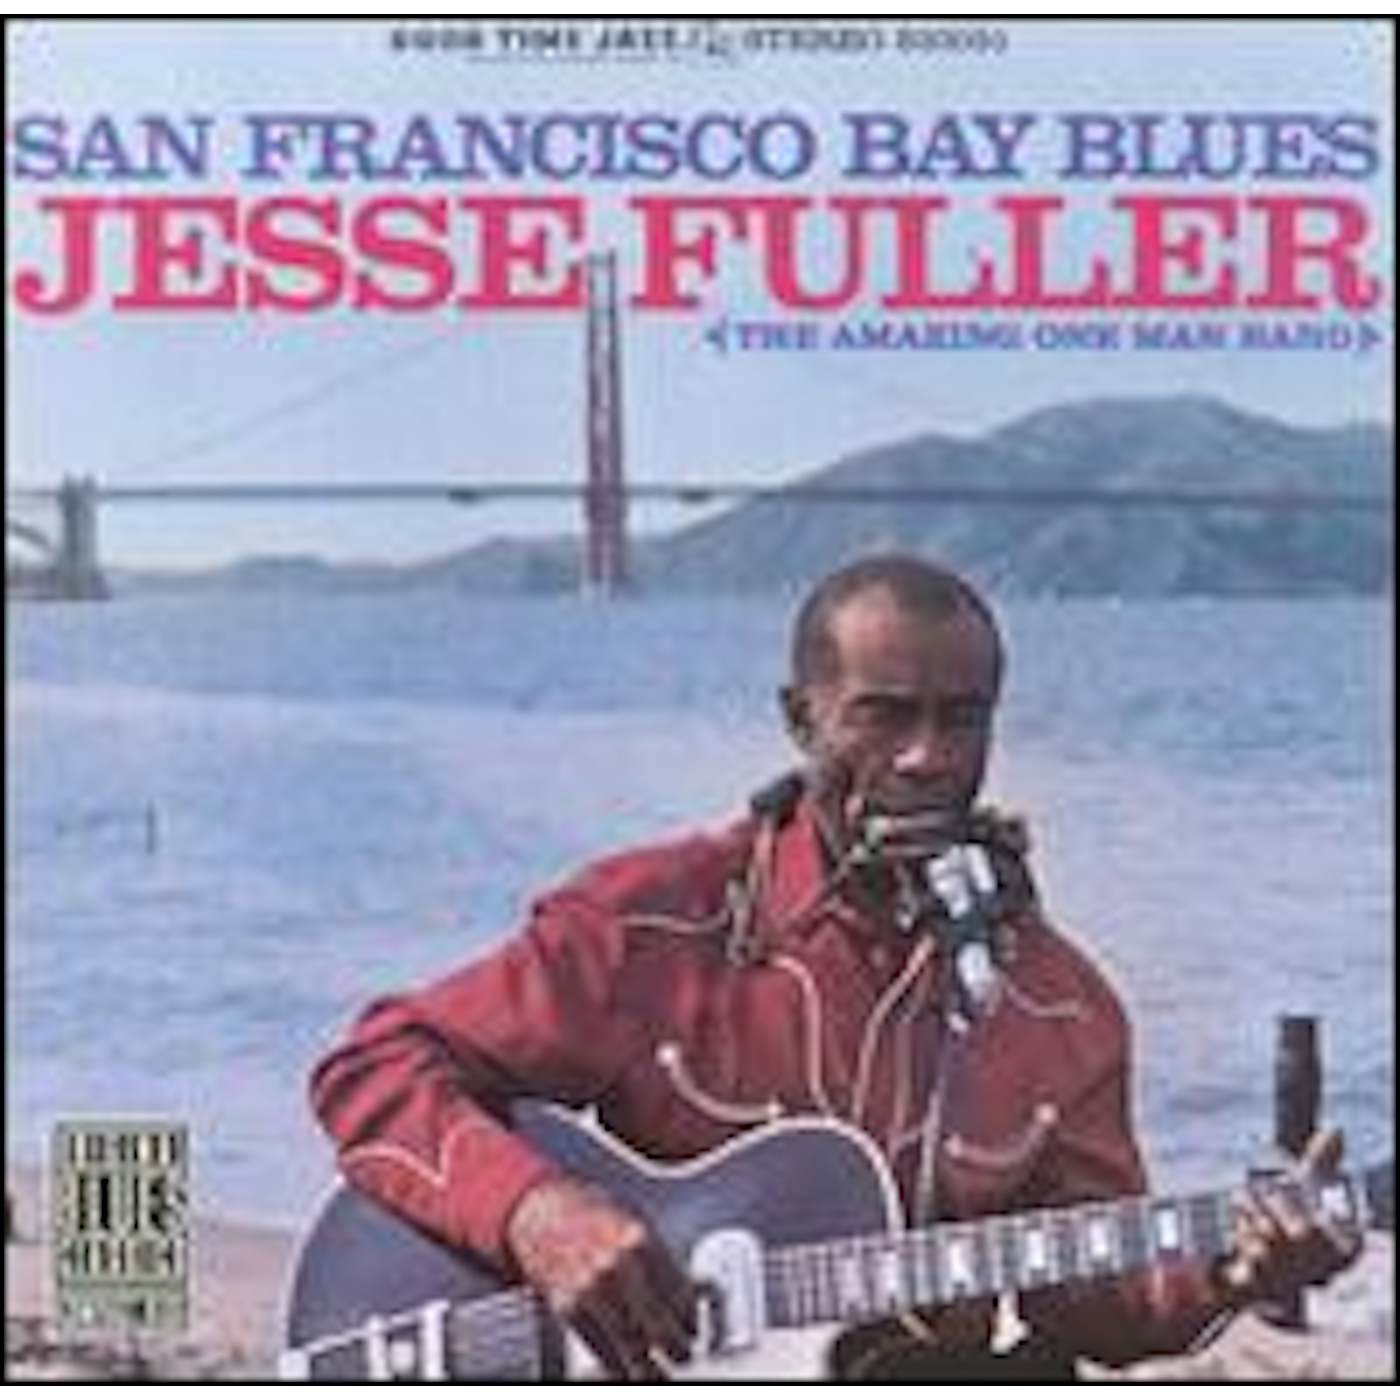 Jesse Fuller SAN FRANCISCO BAY BLUES CD